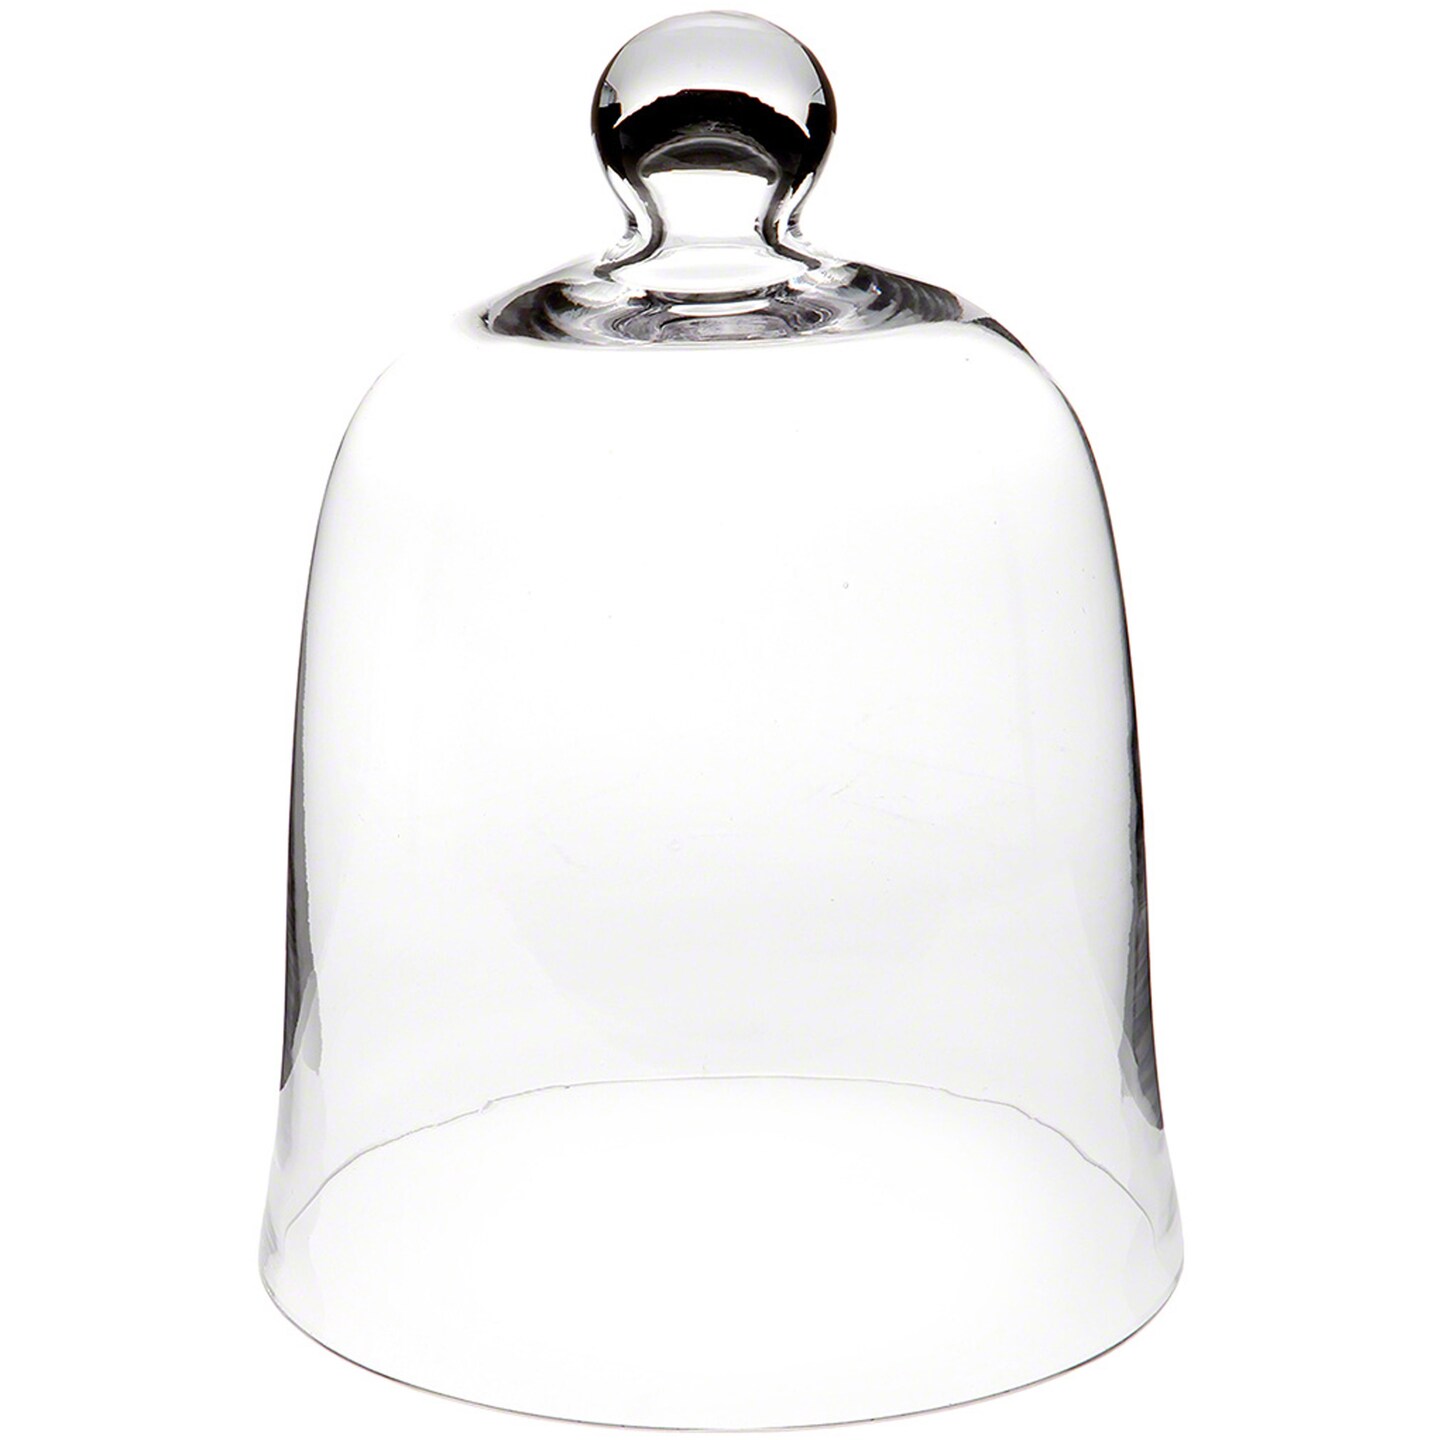 Plymor Bell Jar Glass Display Dome Cloche